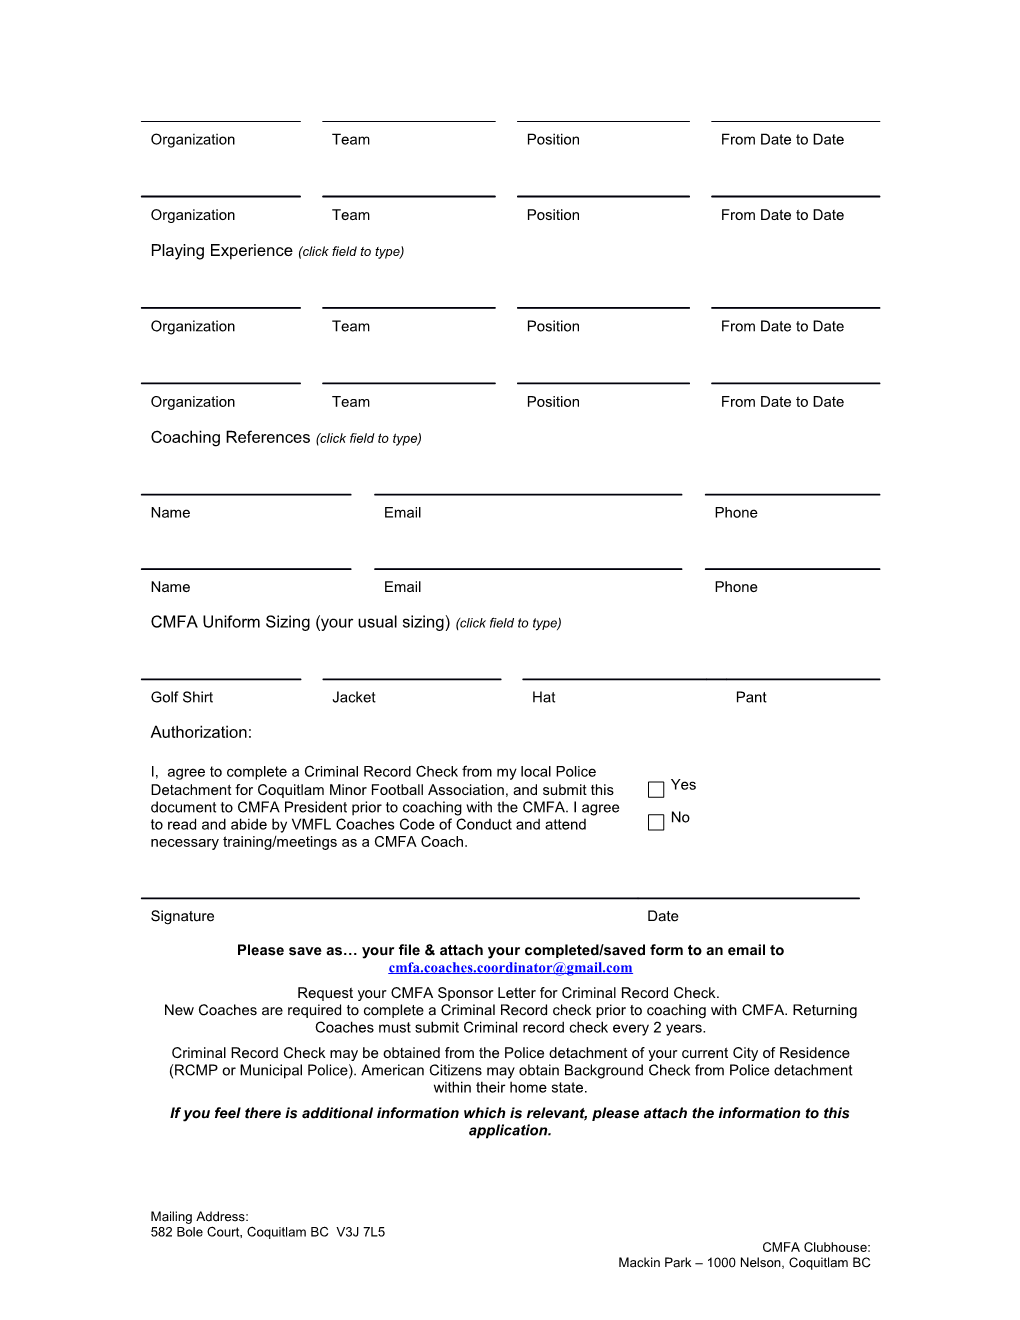 Coquitlam Minor Football Association2015 Coaching Staff Application/Registration Form